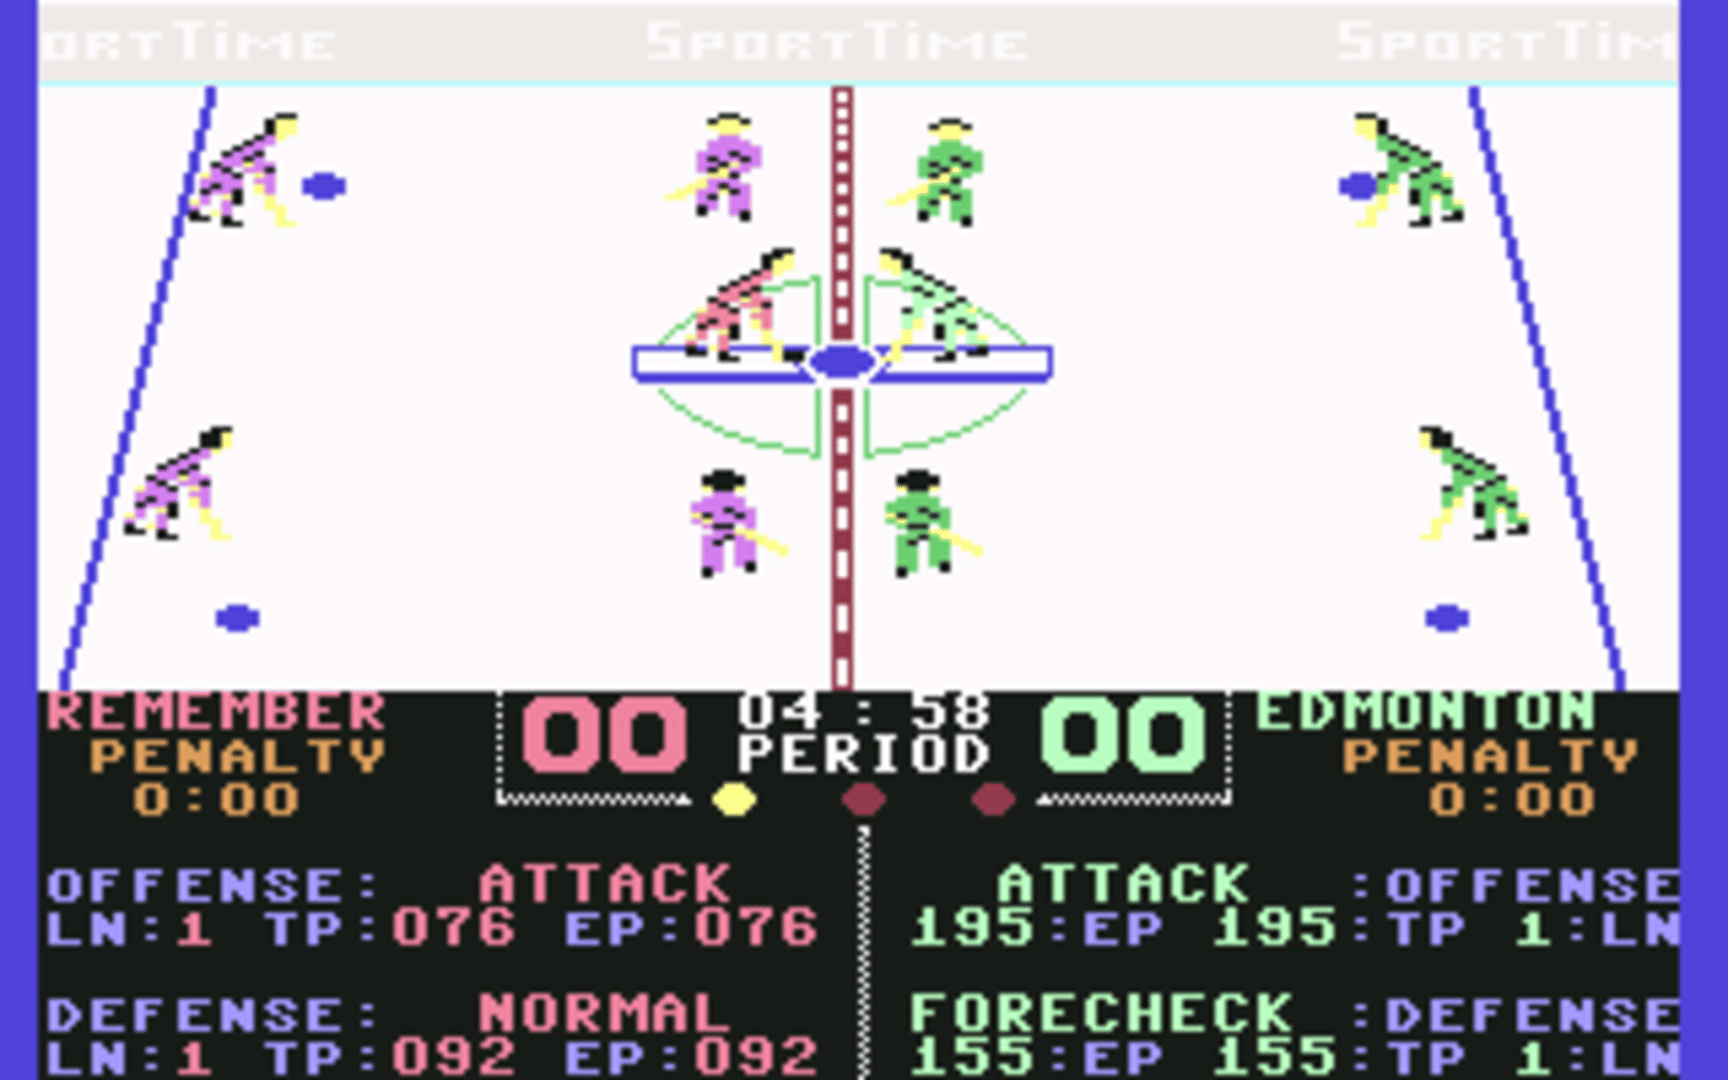 Superstar Ice Hockey screenshot